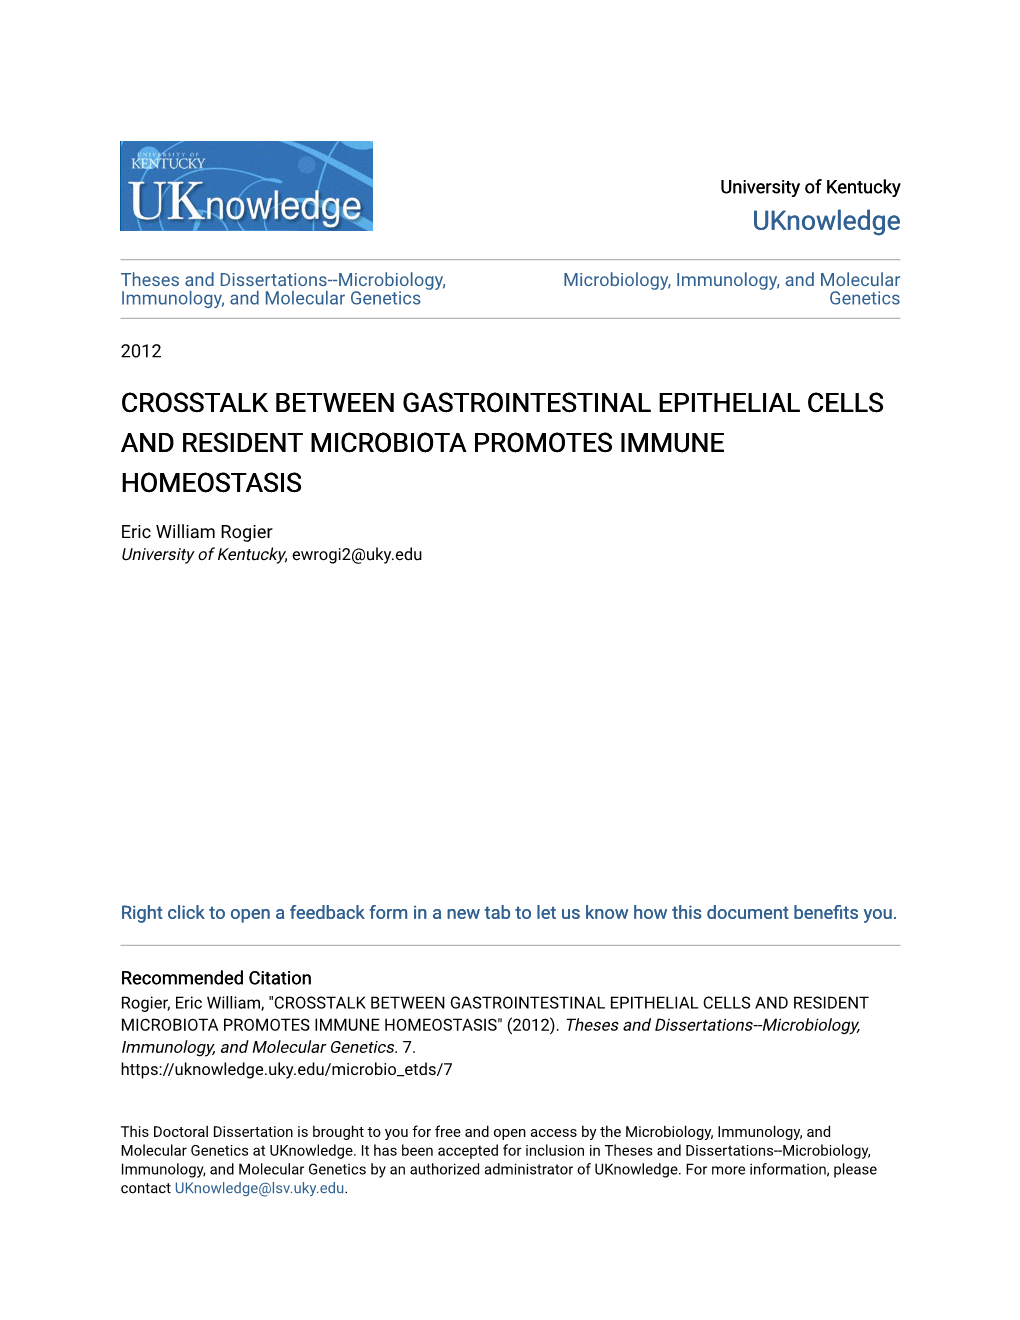 Crosstalk Between Gastrointestinal Epithelial Cells and Resident Microbiota Promotes Immune Homeostasis